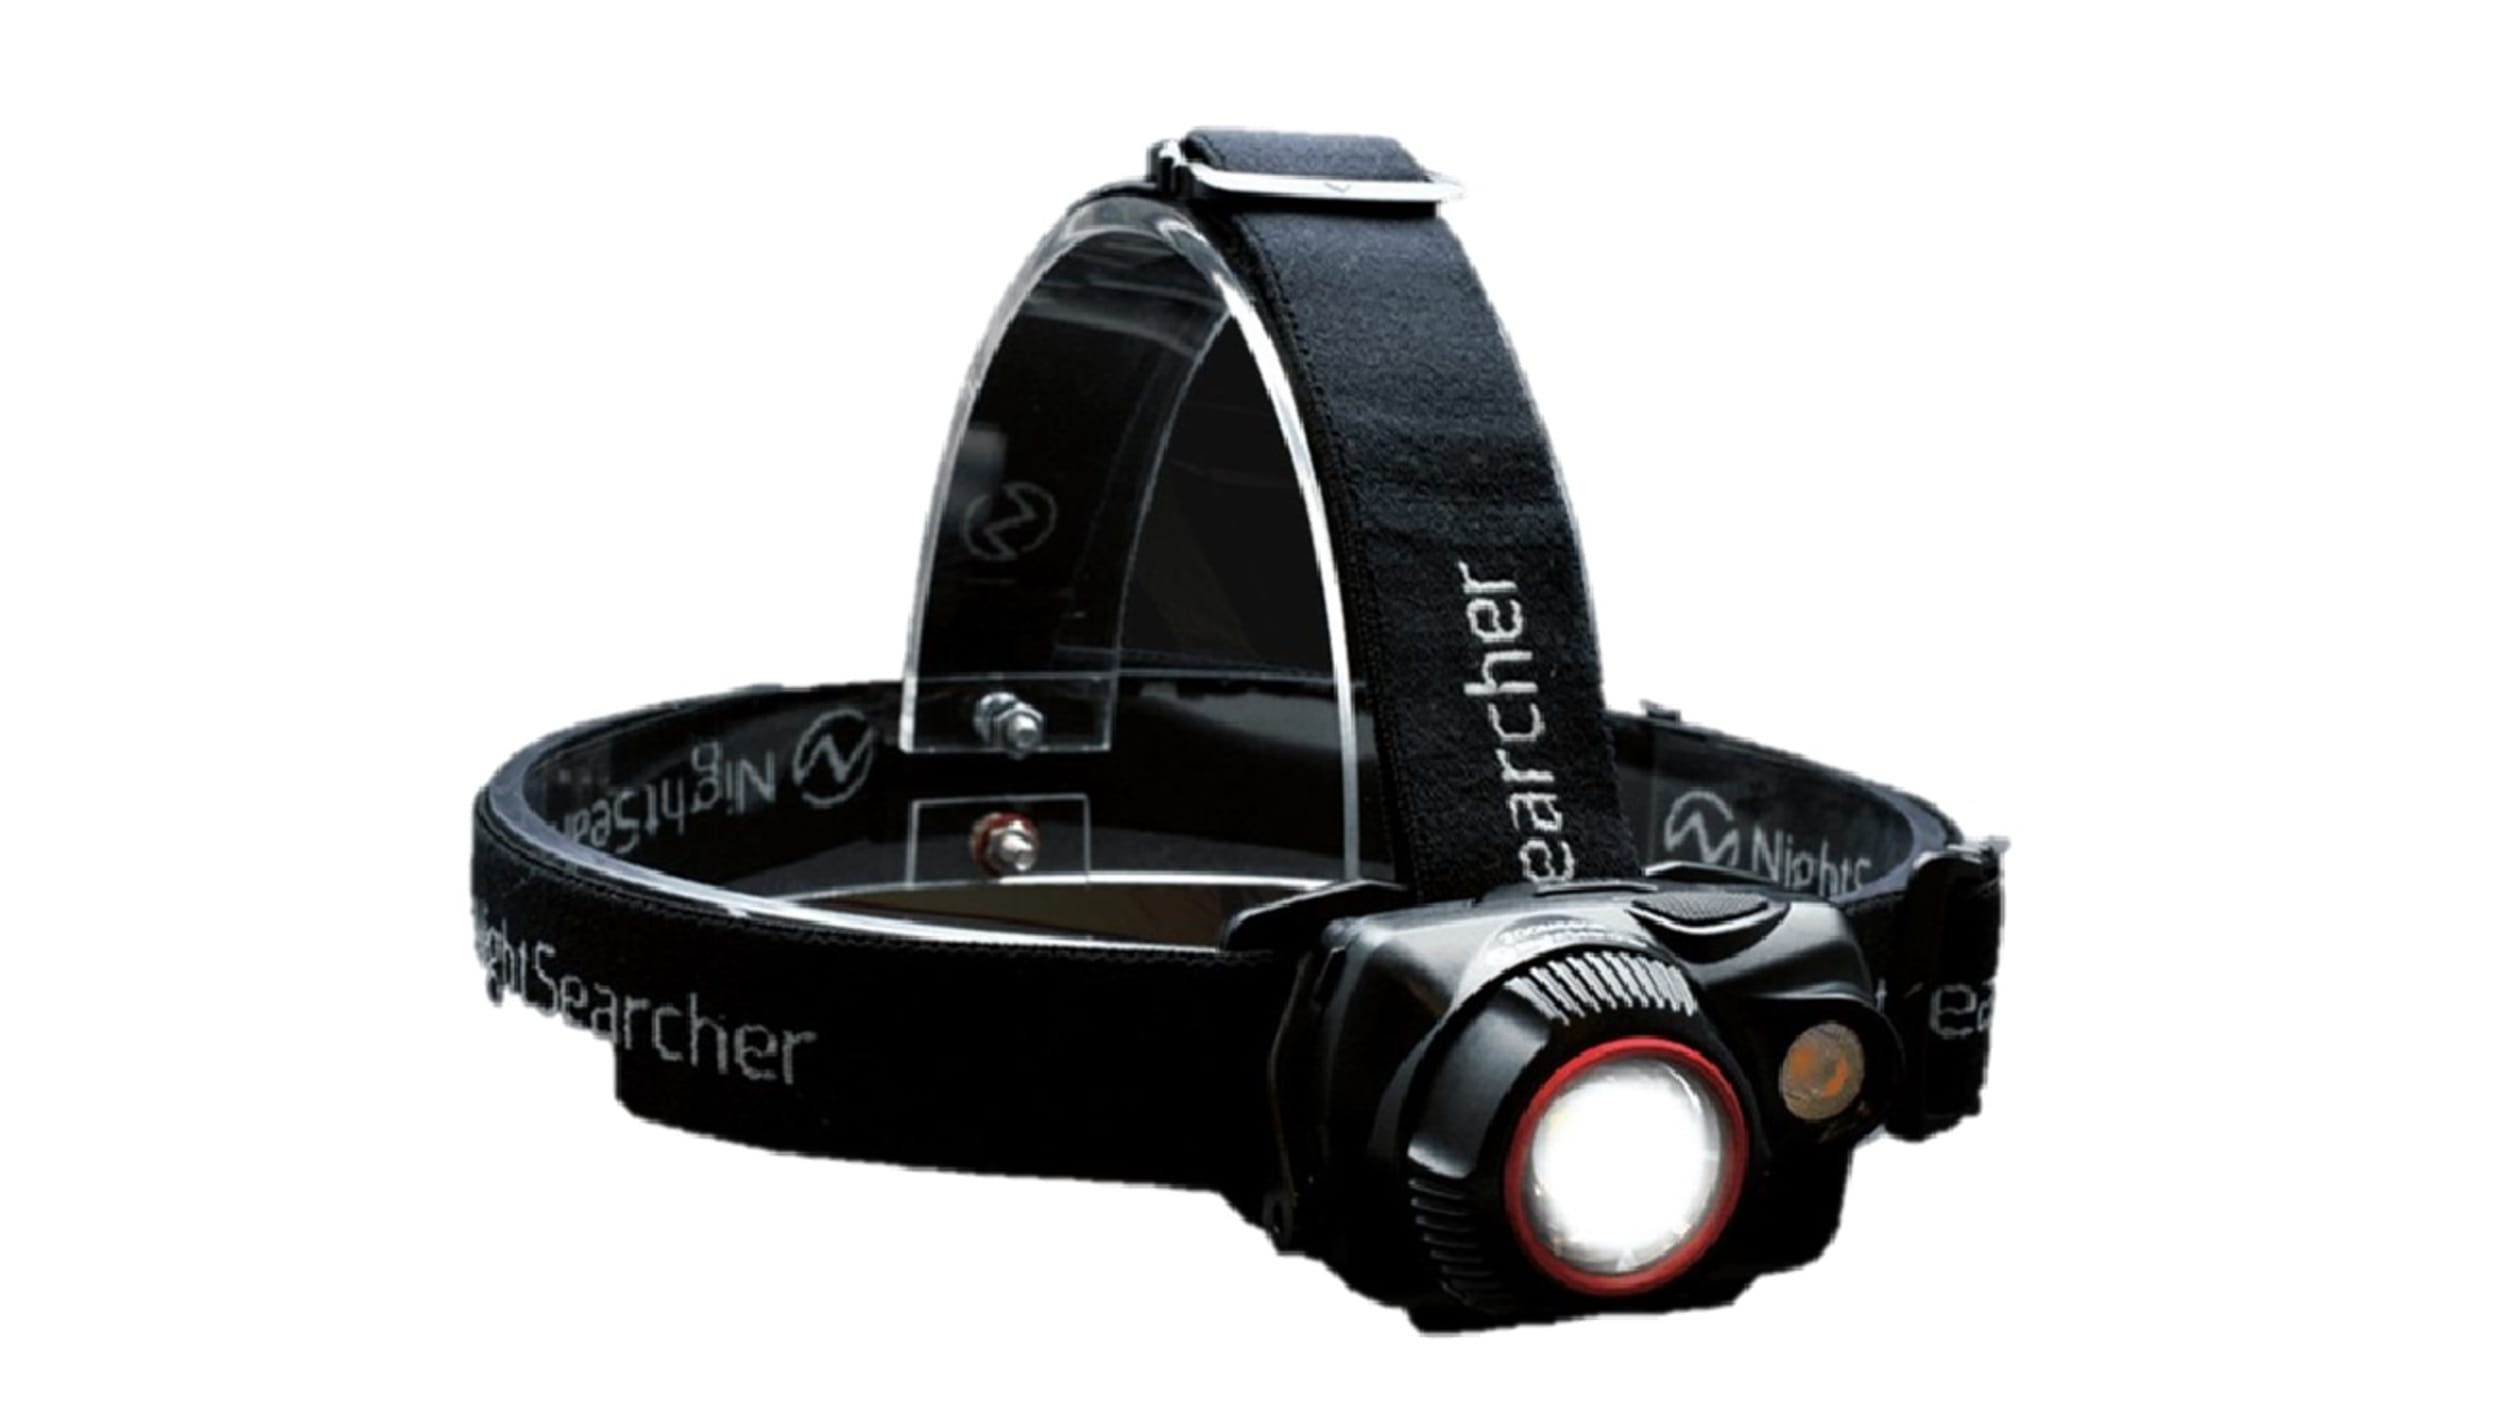 NSHTZOOM700R | Nightsearcher LED Head Torch 700 lm, 200 m Range | RS